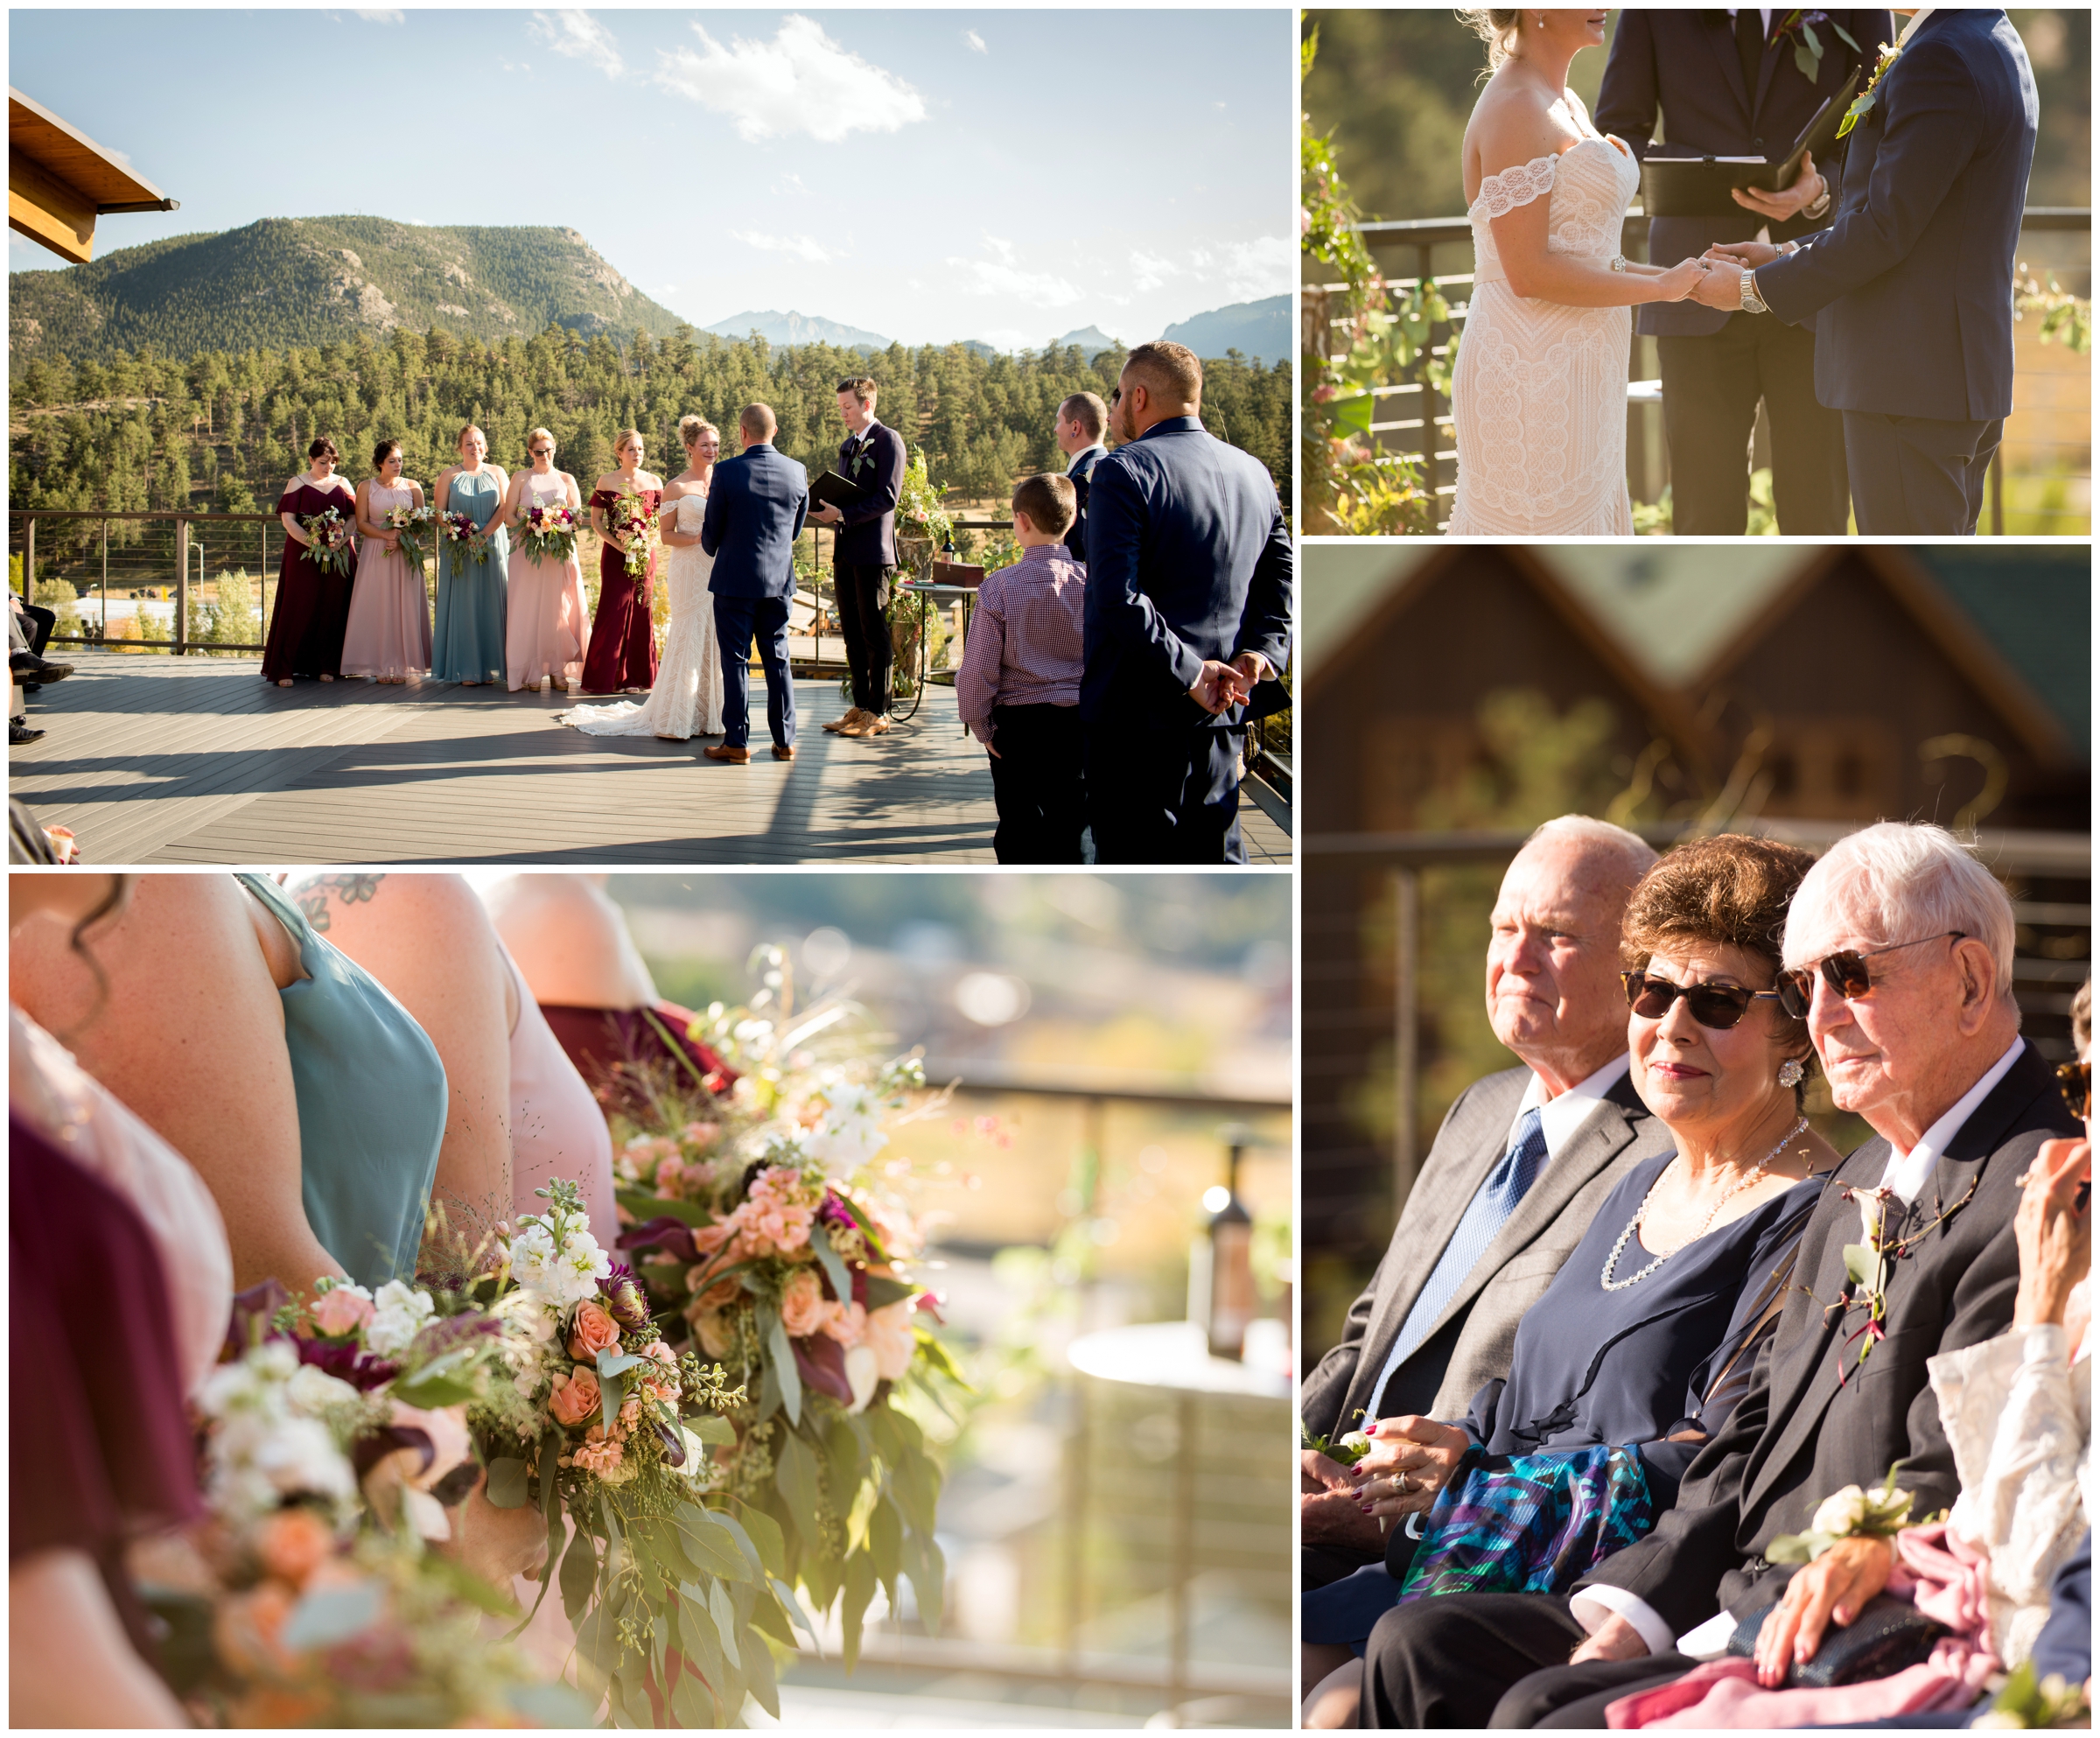 wedding ceremony on outdoor deck at Fallr River Village Resort